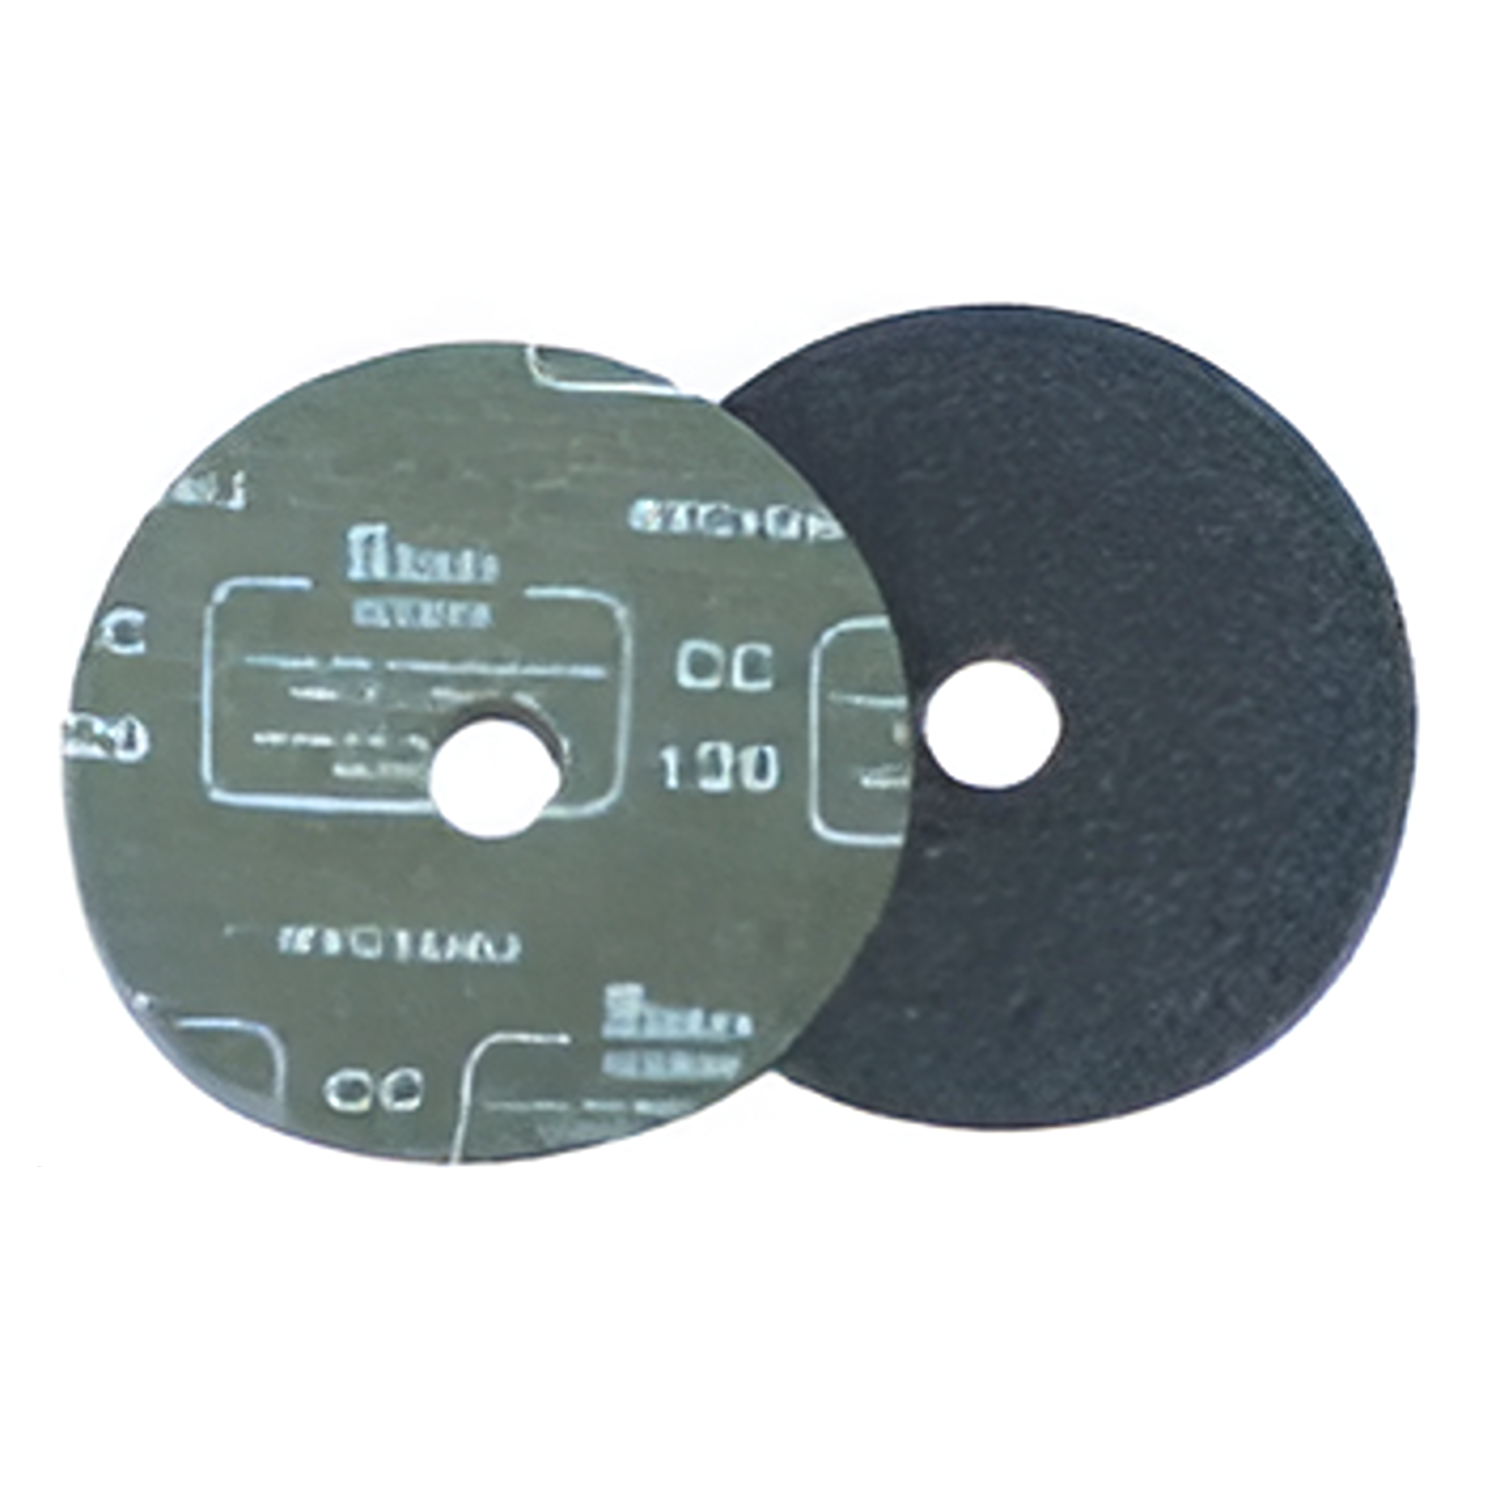 YEW AIK AA/CC Silicon Carbide Sanding Disc 6”x 7/8” - Premium Sanding Disc from YEW AIK - Shop now at Yew Aik.